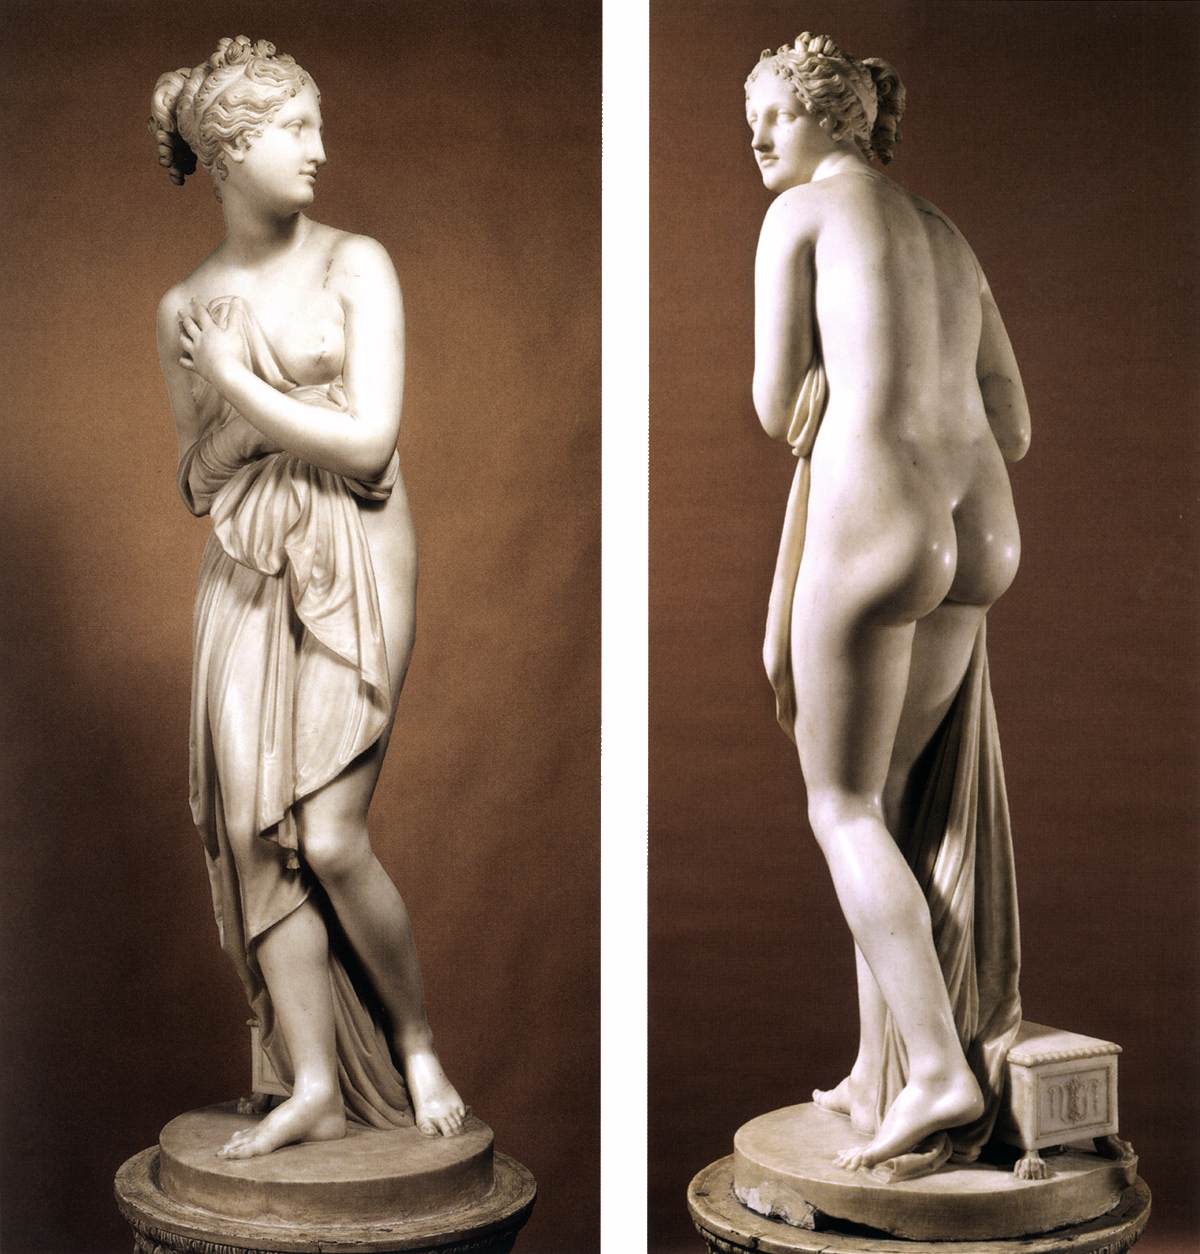 Antonio+Canova-1757-1822 (178).jpg